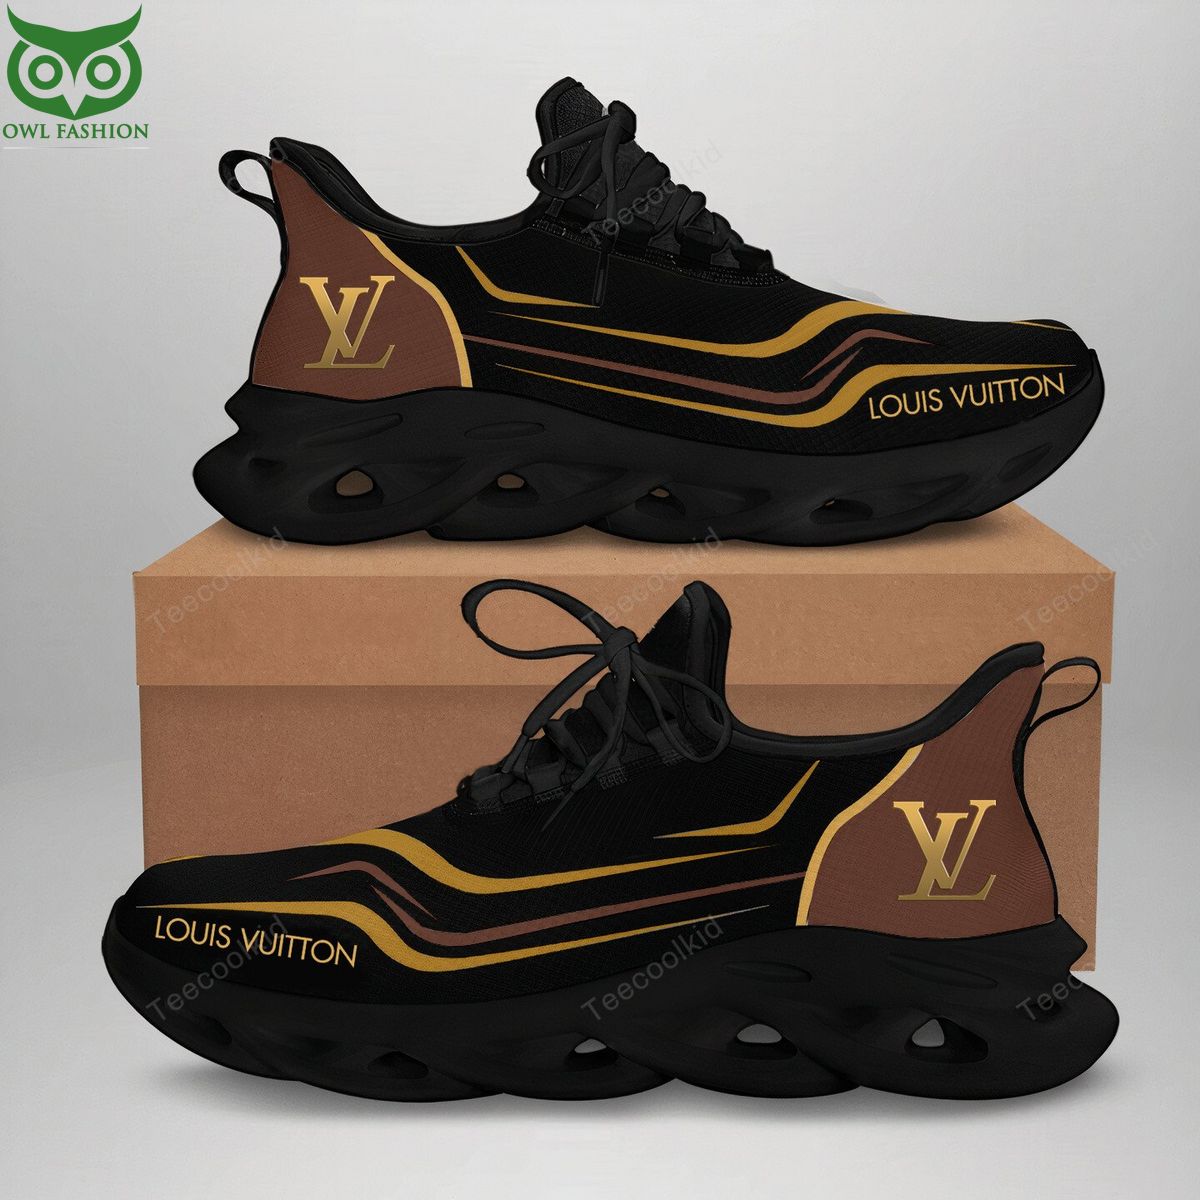 Louis Vuitton US Black Max Soul Sneakers Good one dear